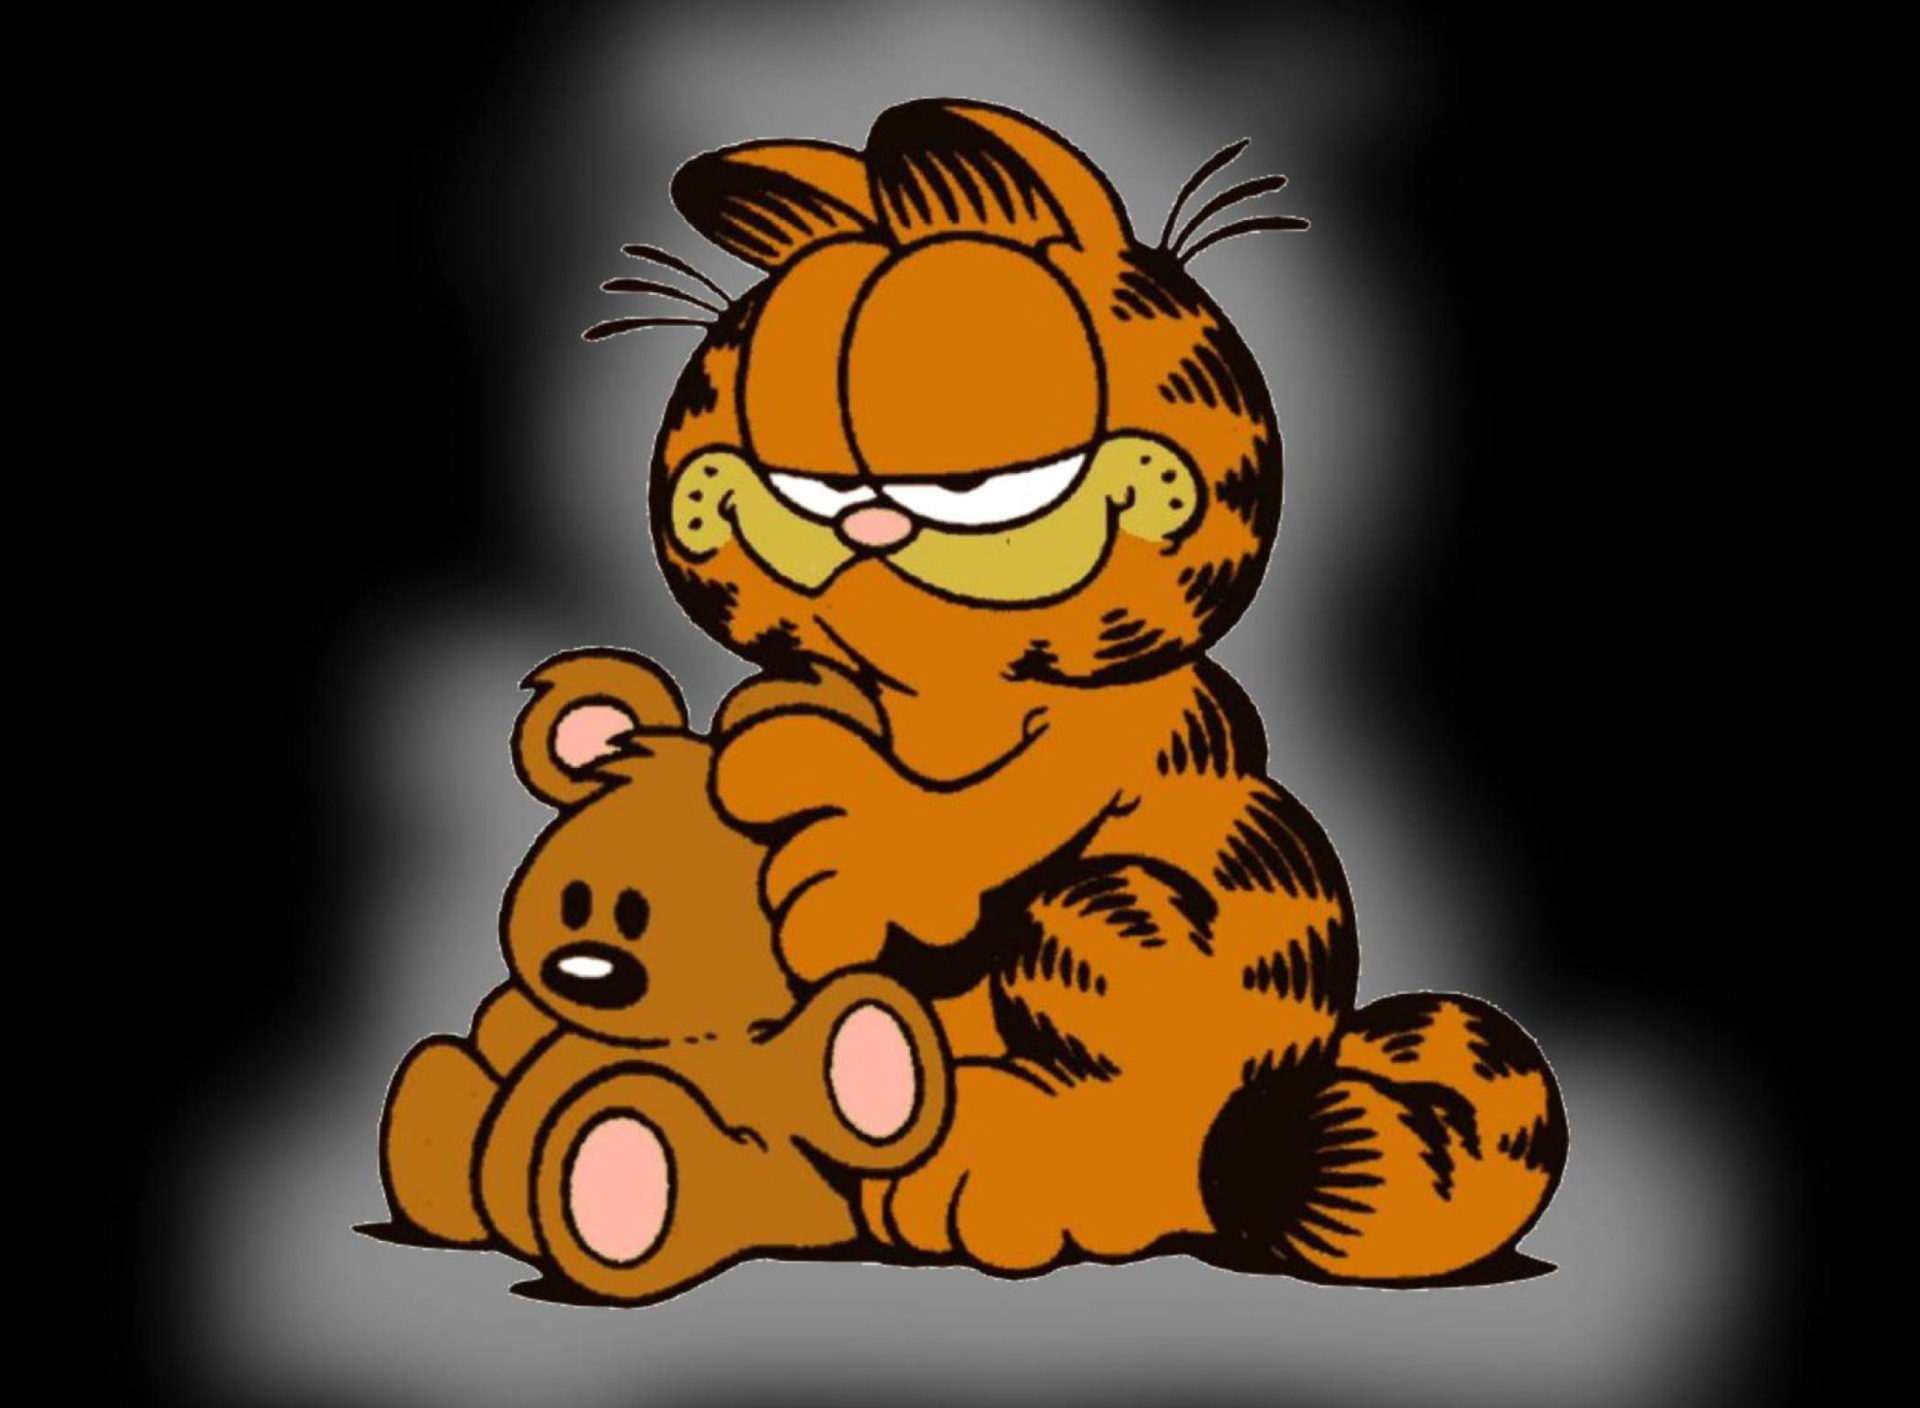 Top 999+ Garfield Wallpaper Full HD, 4K✓Free to Use